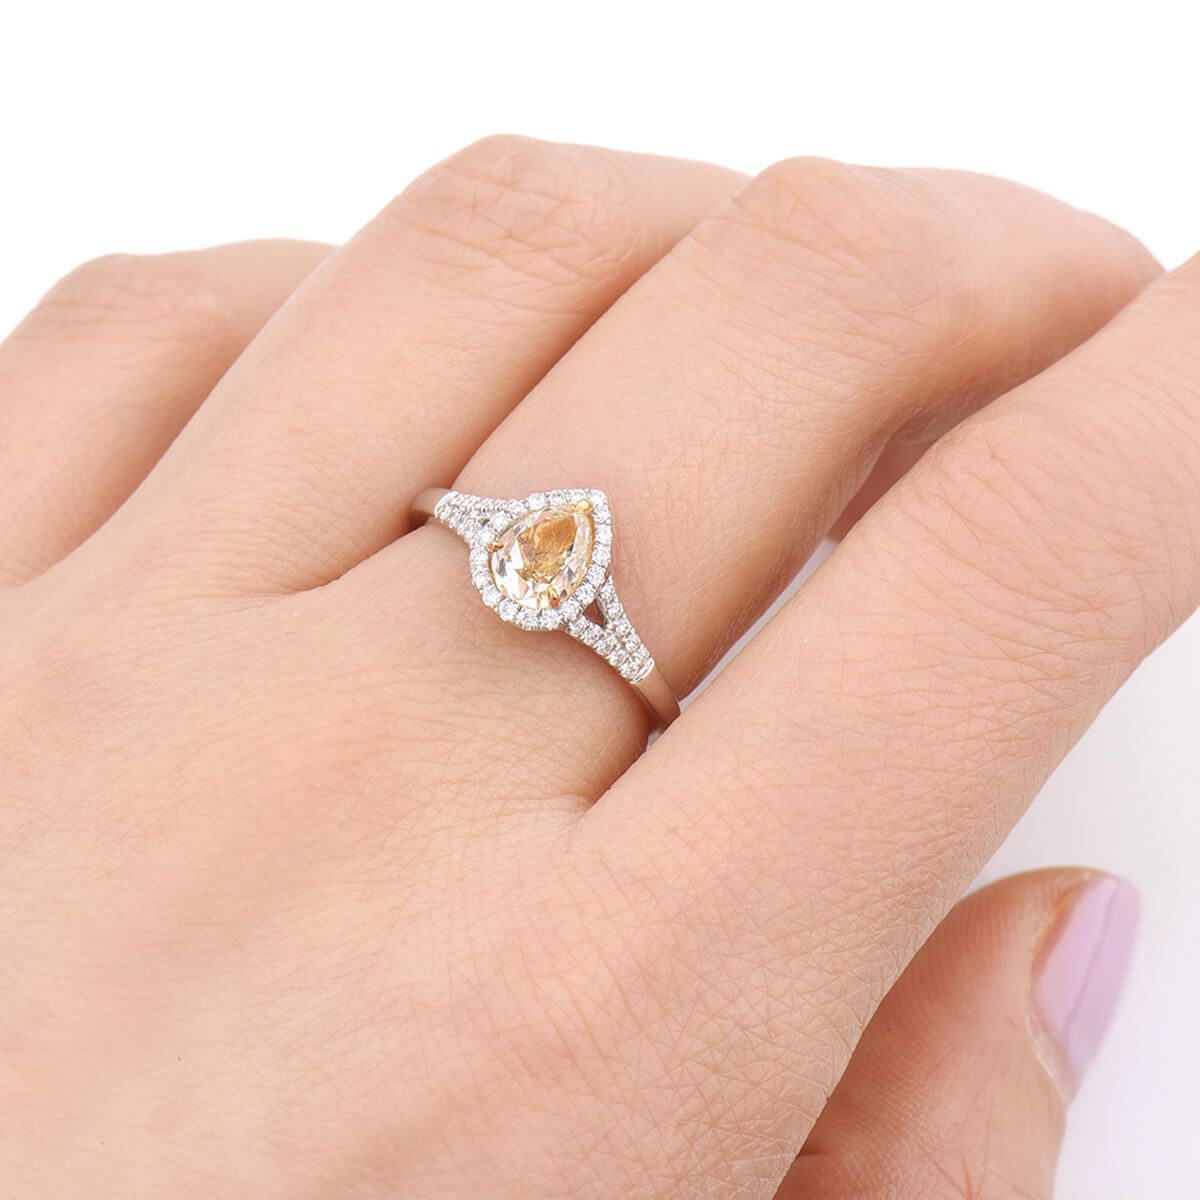 Fancy Light Yellow Diamond Ring, 1.18 Ct. TW, Pear shape, EG_Lab Certified, J520149